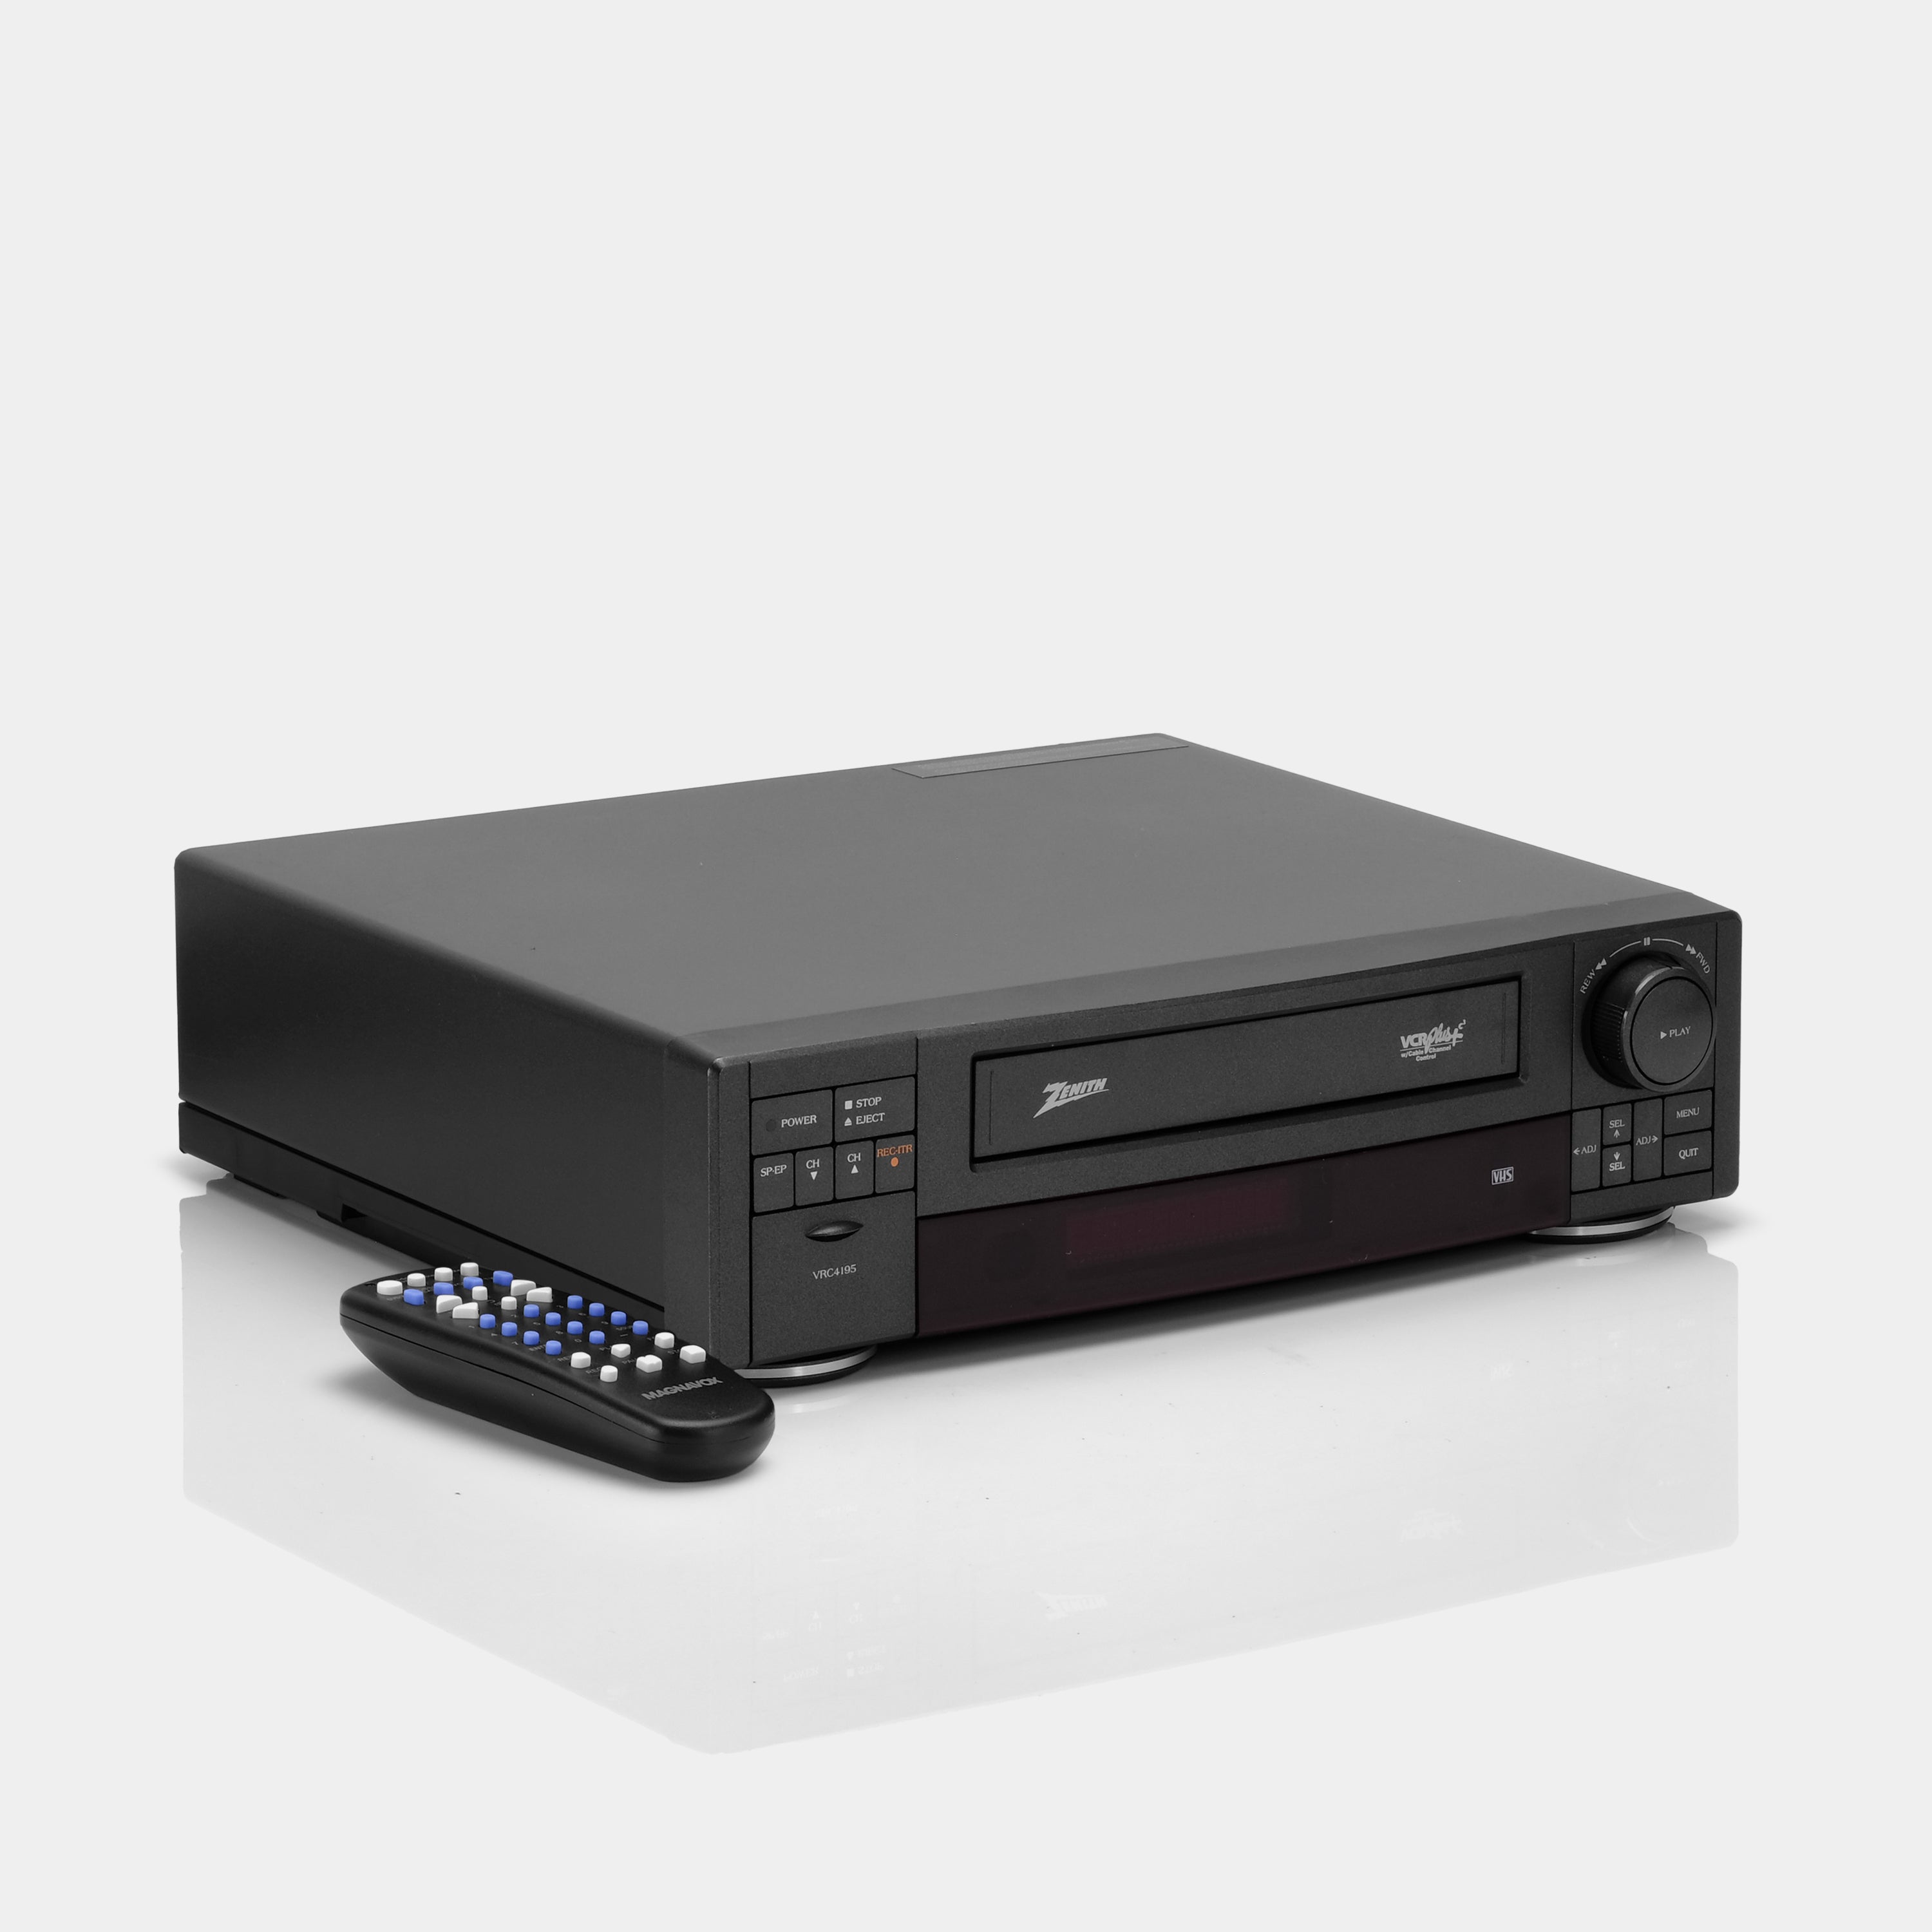 Zenith VRC4195 VCR VHS Player